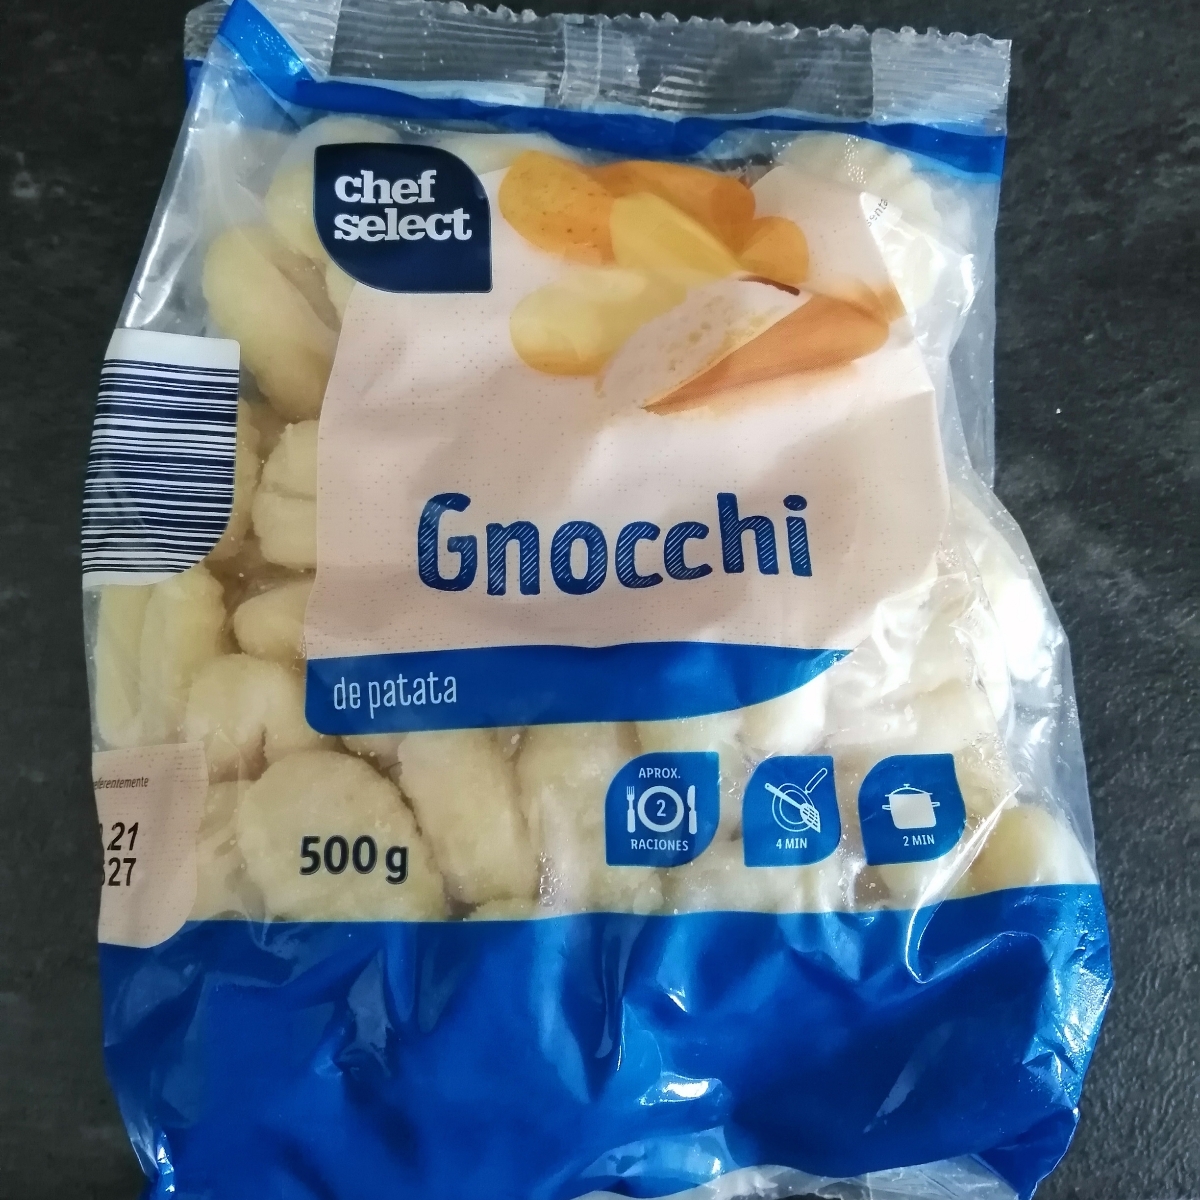 Select abillion Gnocchi Chef | Review